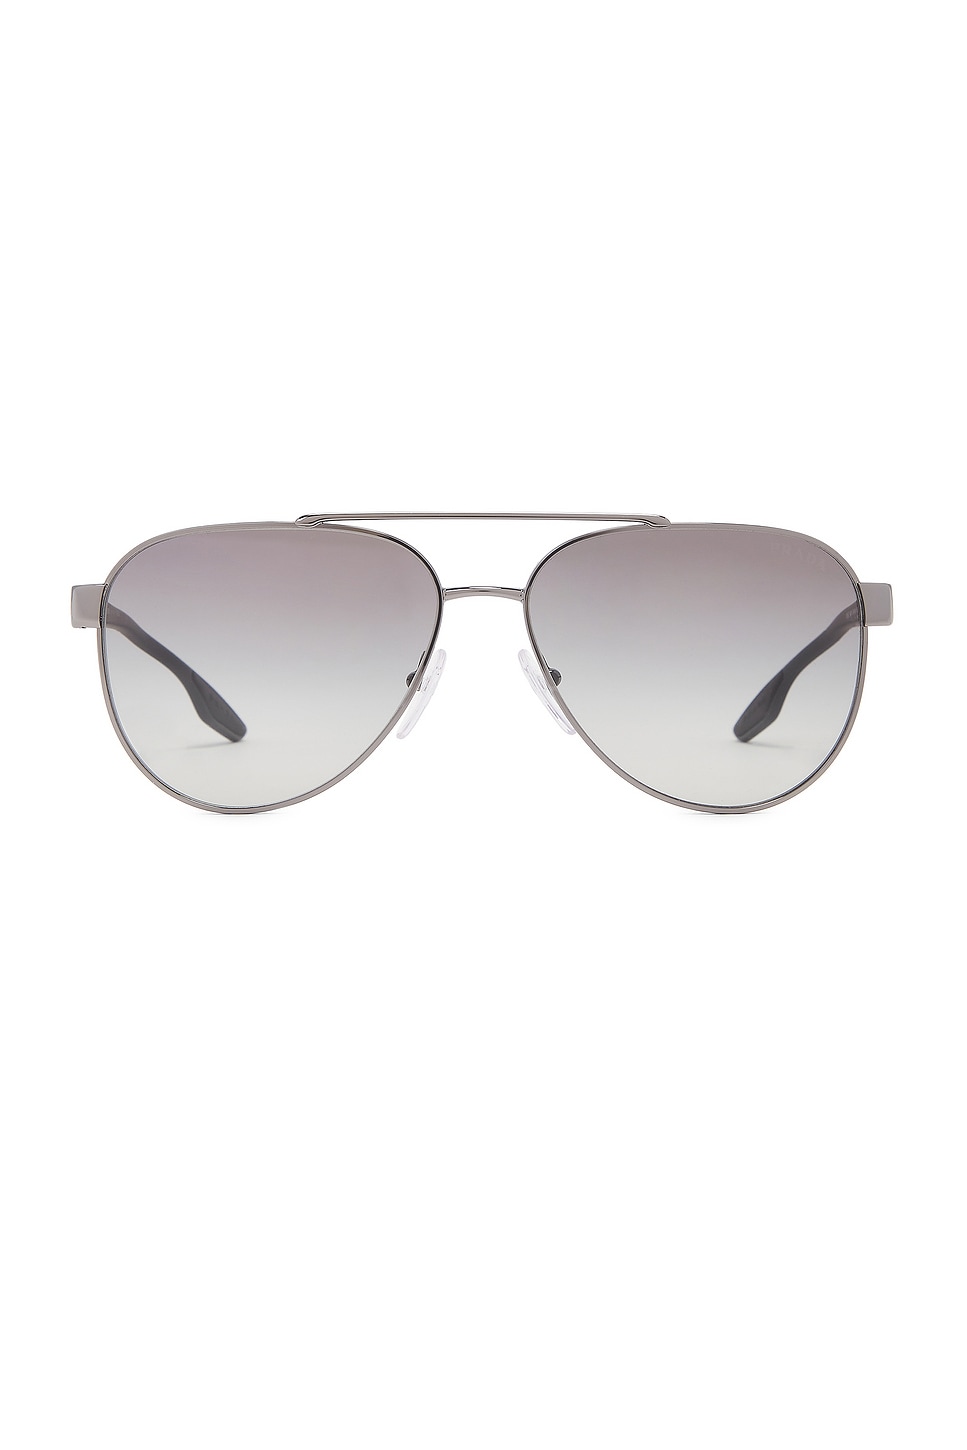 Prada Linea Rossa Aviator Sunglasses In Metallic